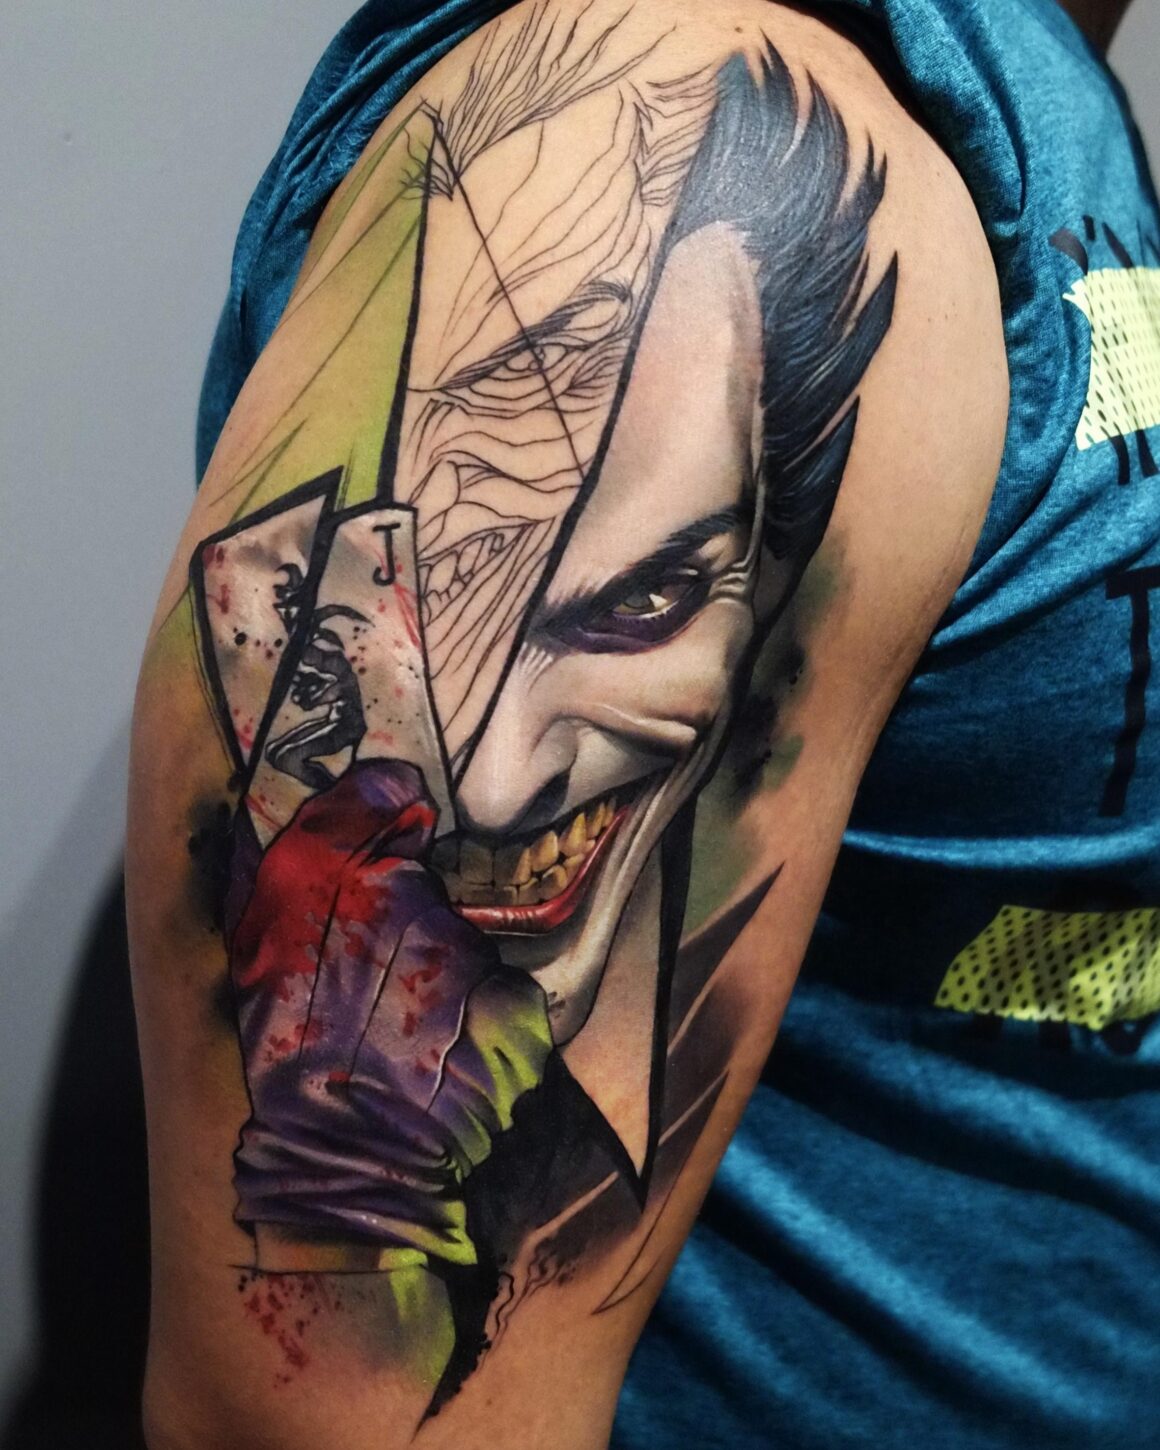 Neo Parker, Creepshow Tattoo, Madrid, Spain